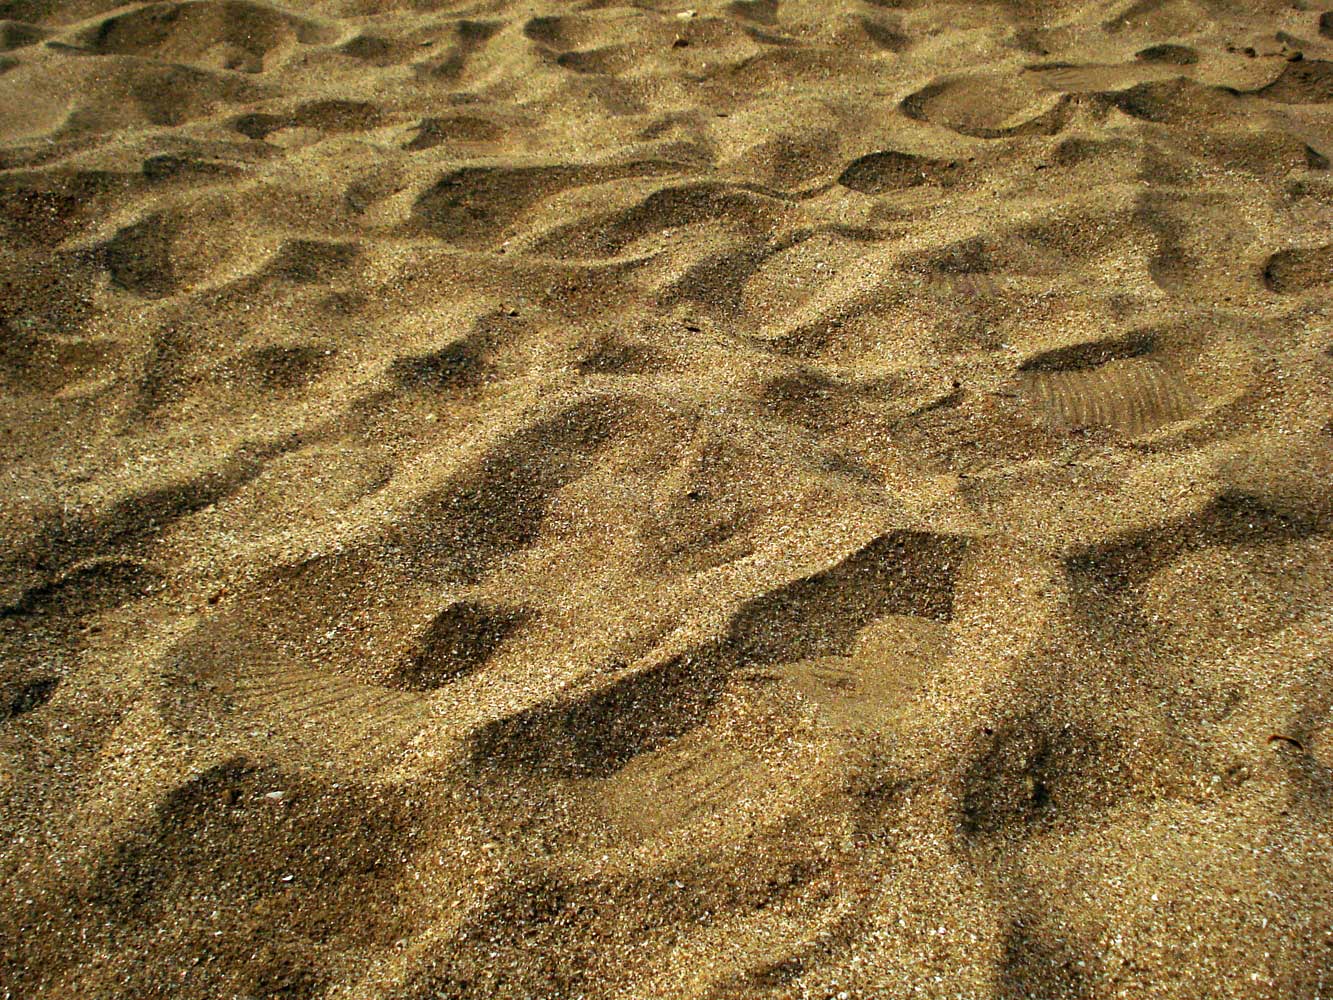 some footprints on a sand area near grass